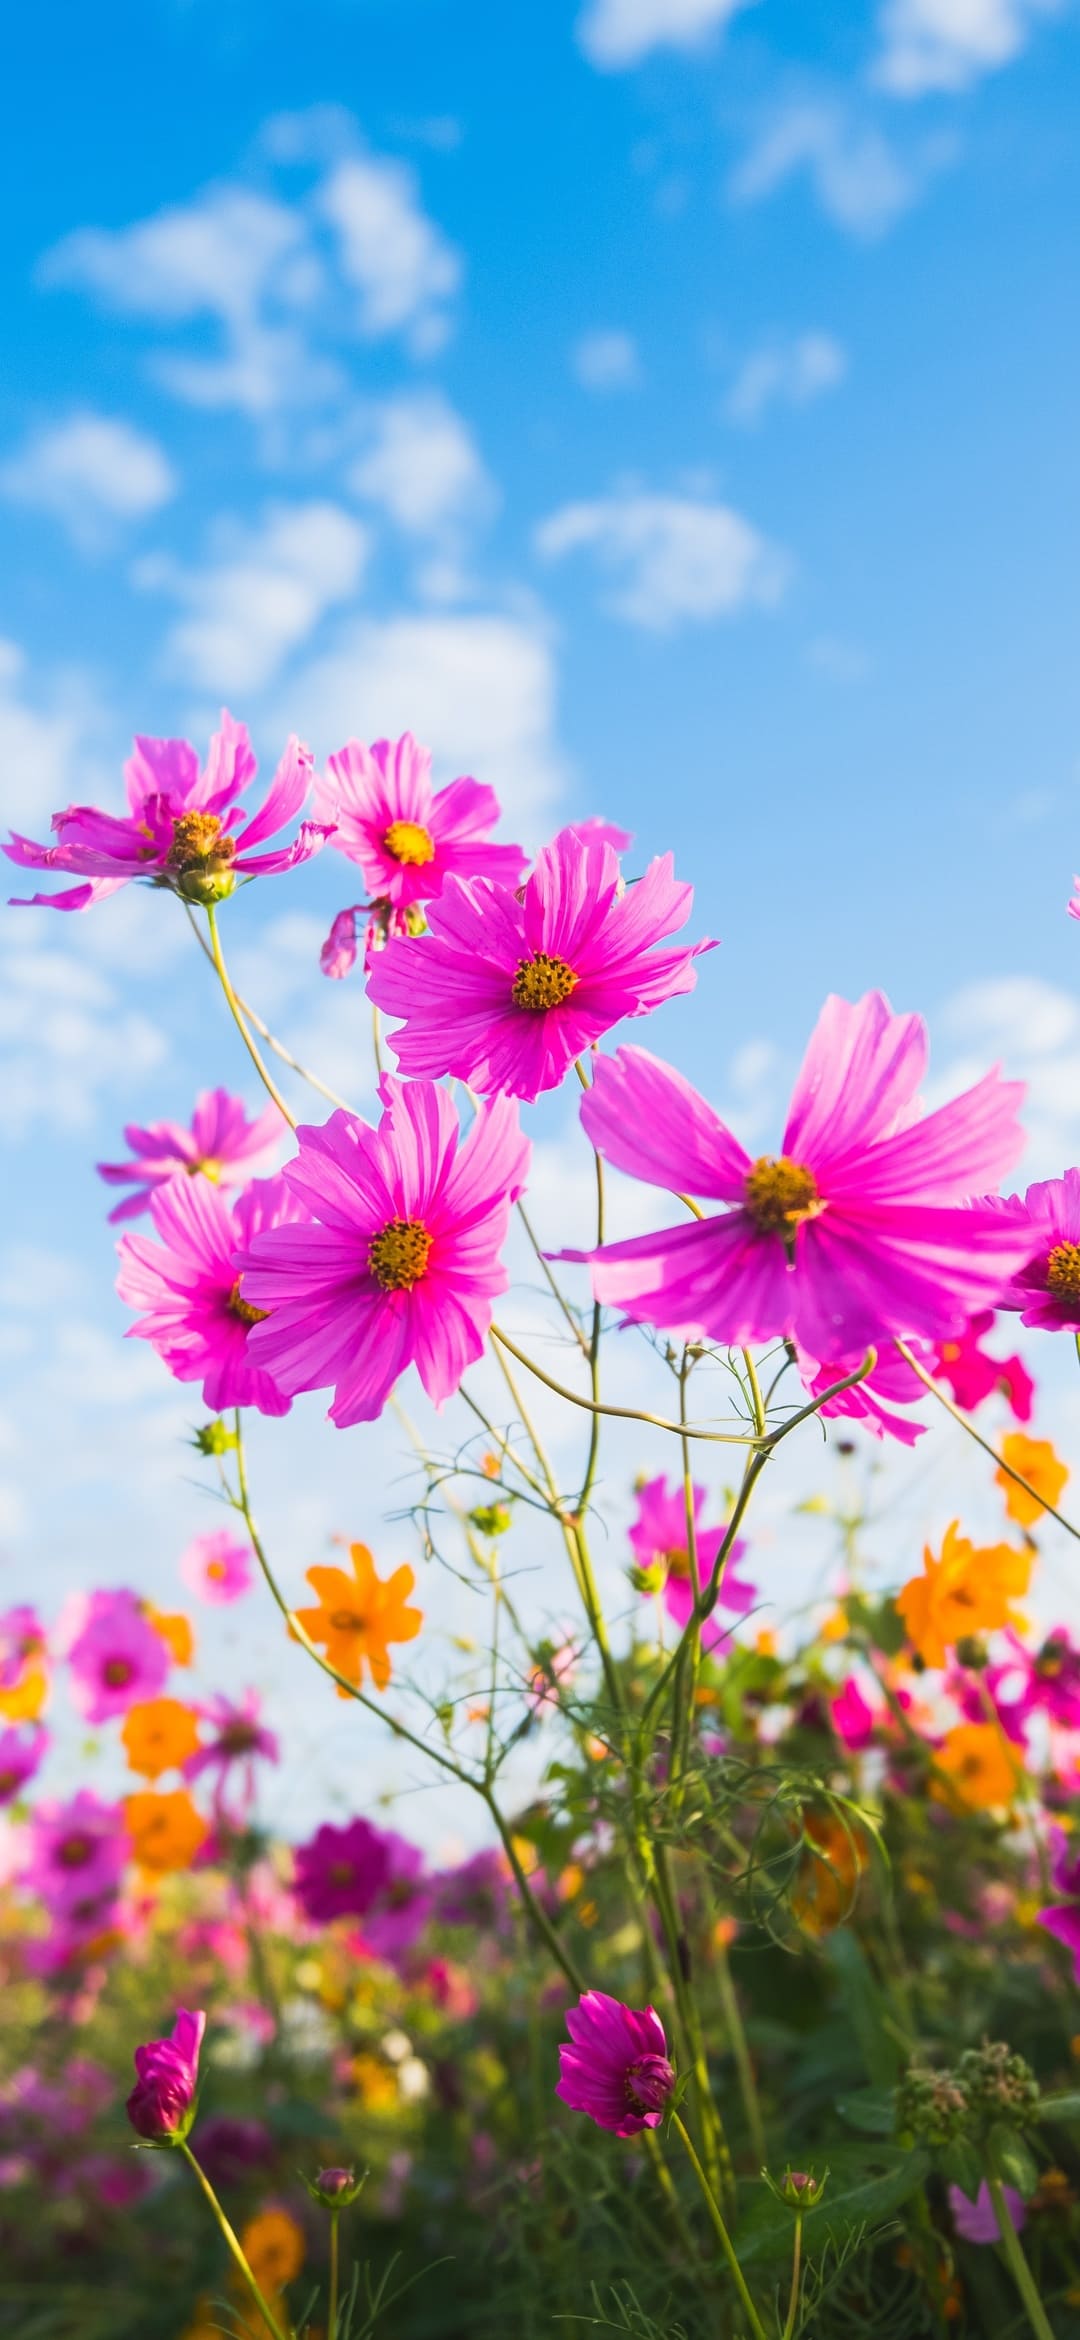 Flowers Wallpapers - Top 65 Best Flower Backgrounds Download